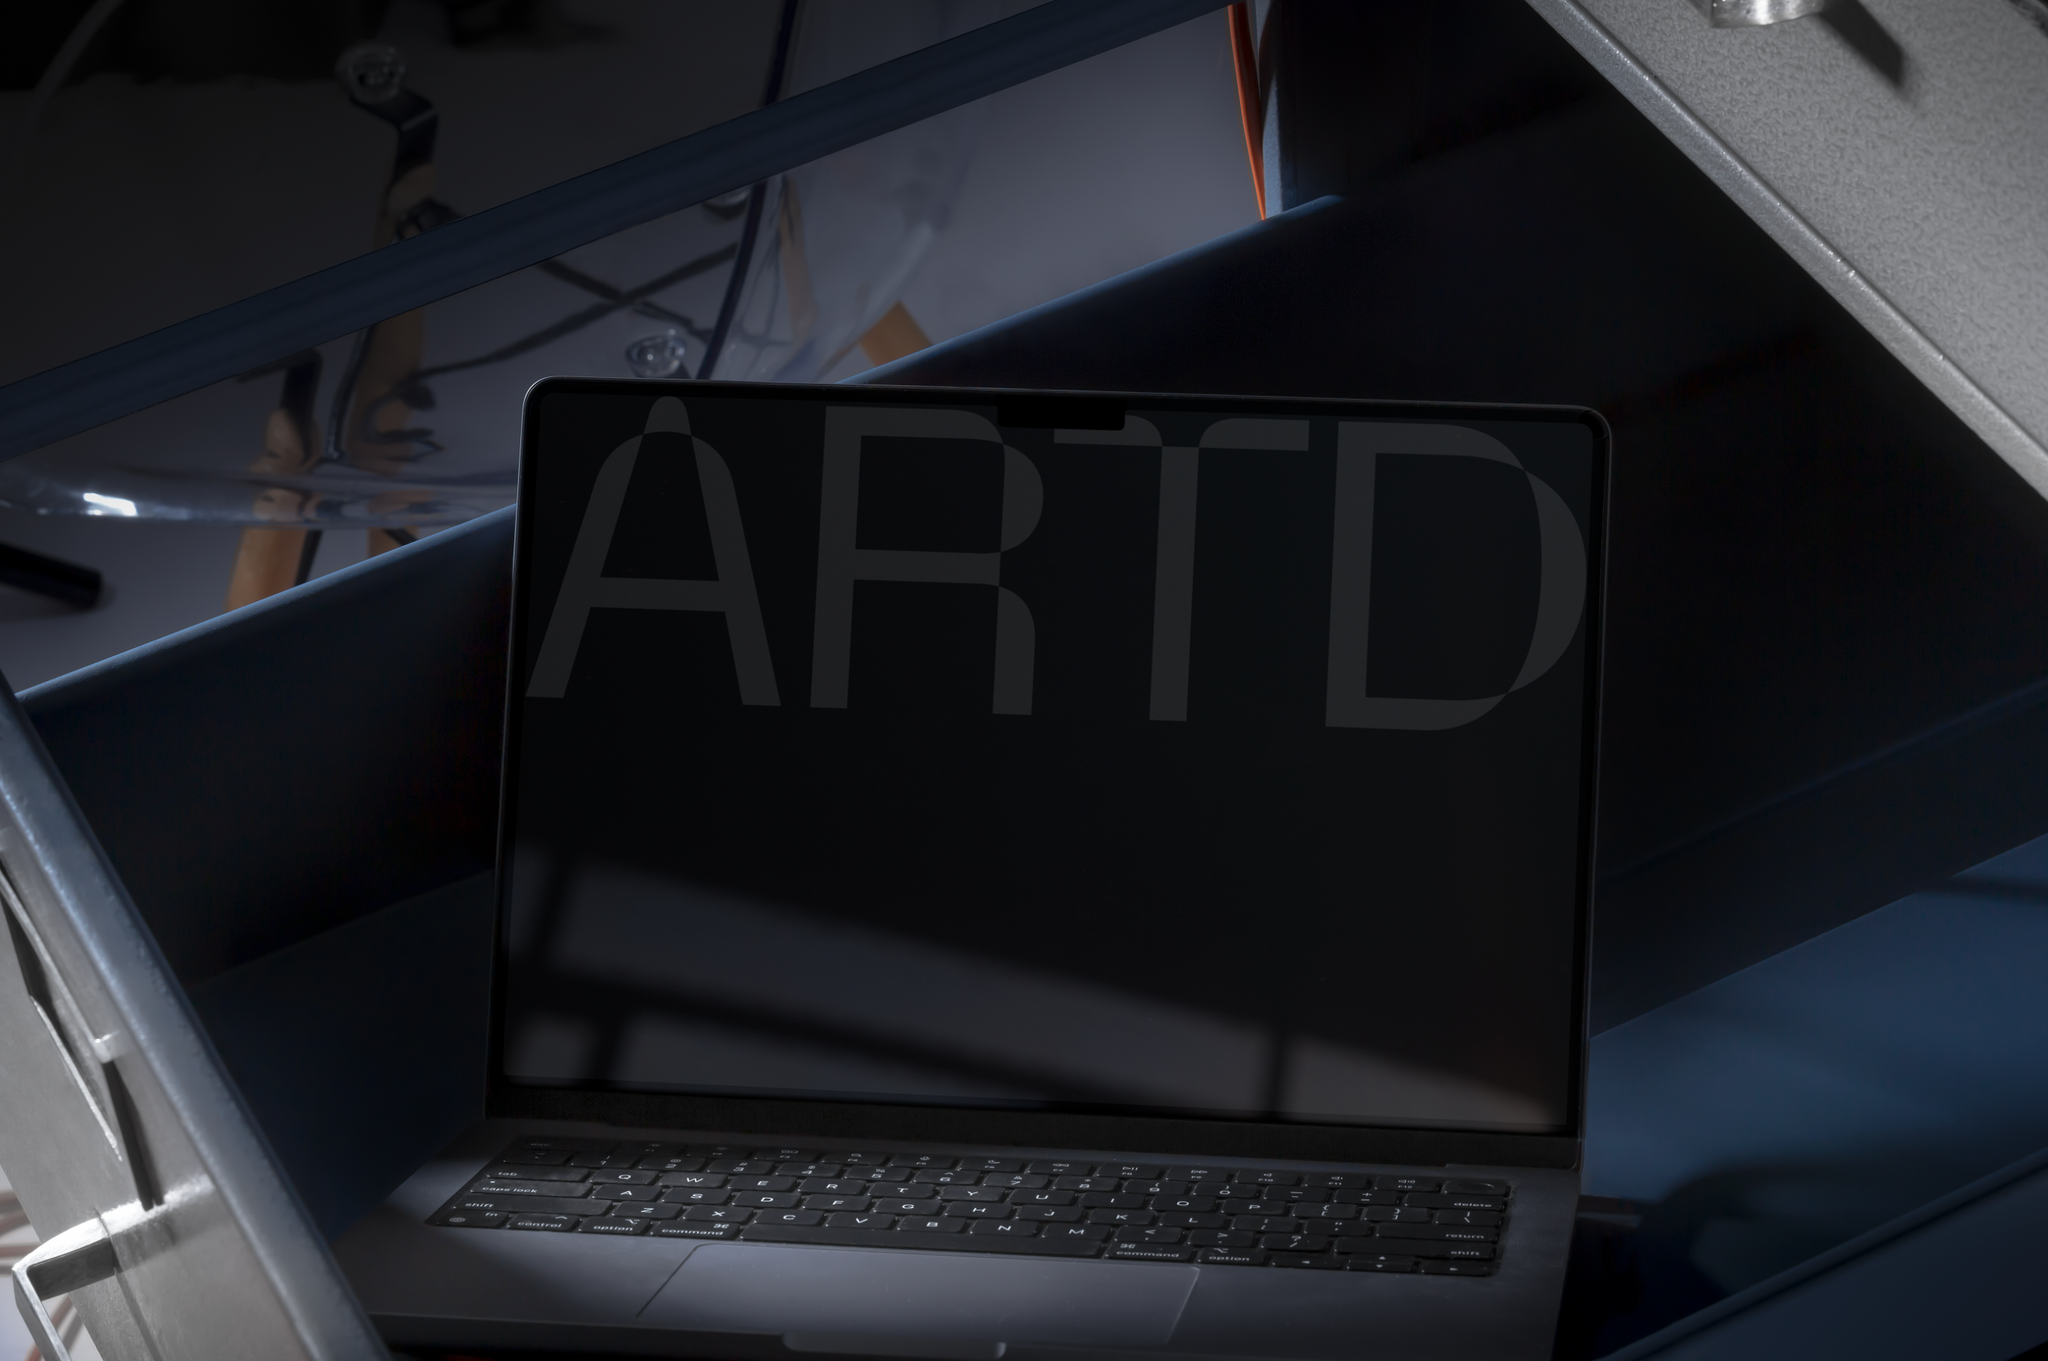 ARTD-C03-Device-028